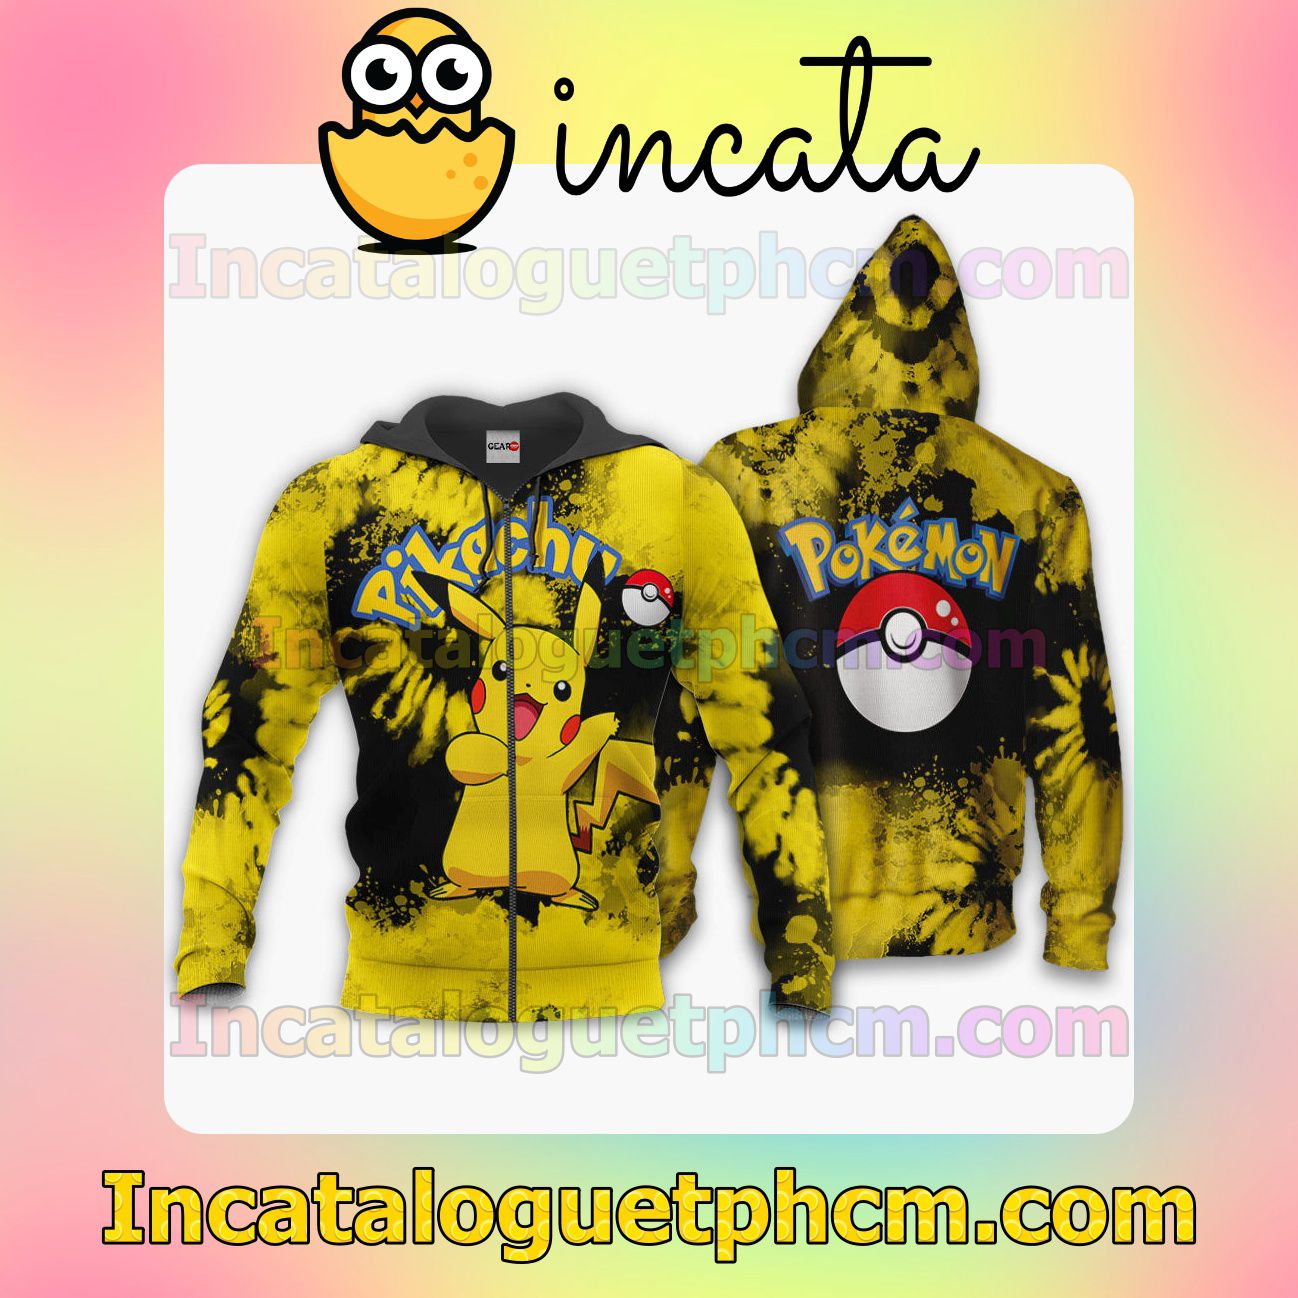 Pikachu Tie Dye Pokemon Anime Clothing Merch Zip Hoodie Jacket Shirts